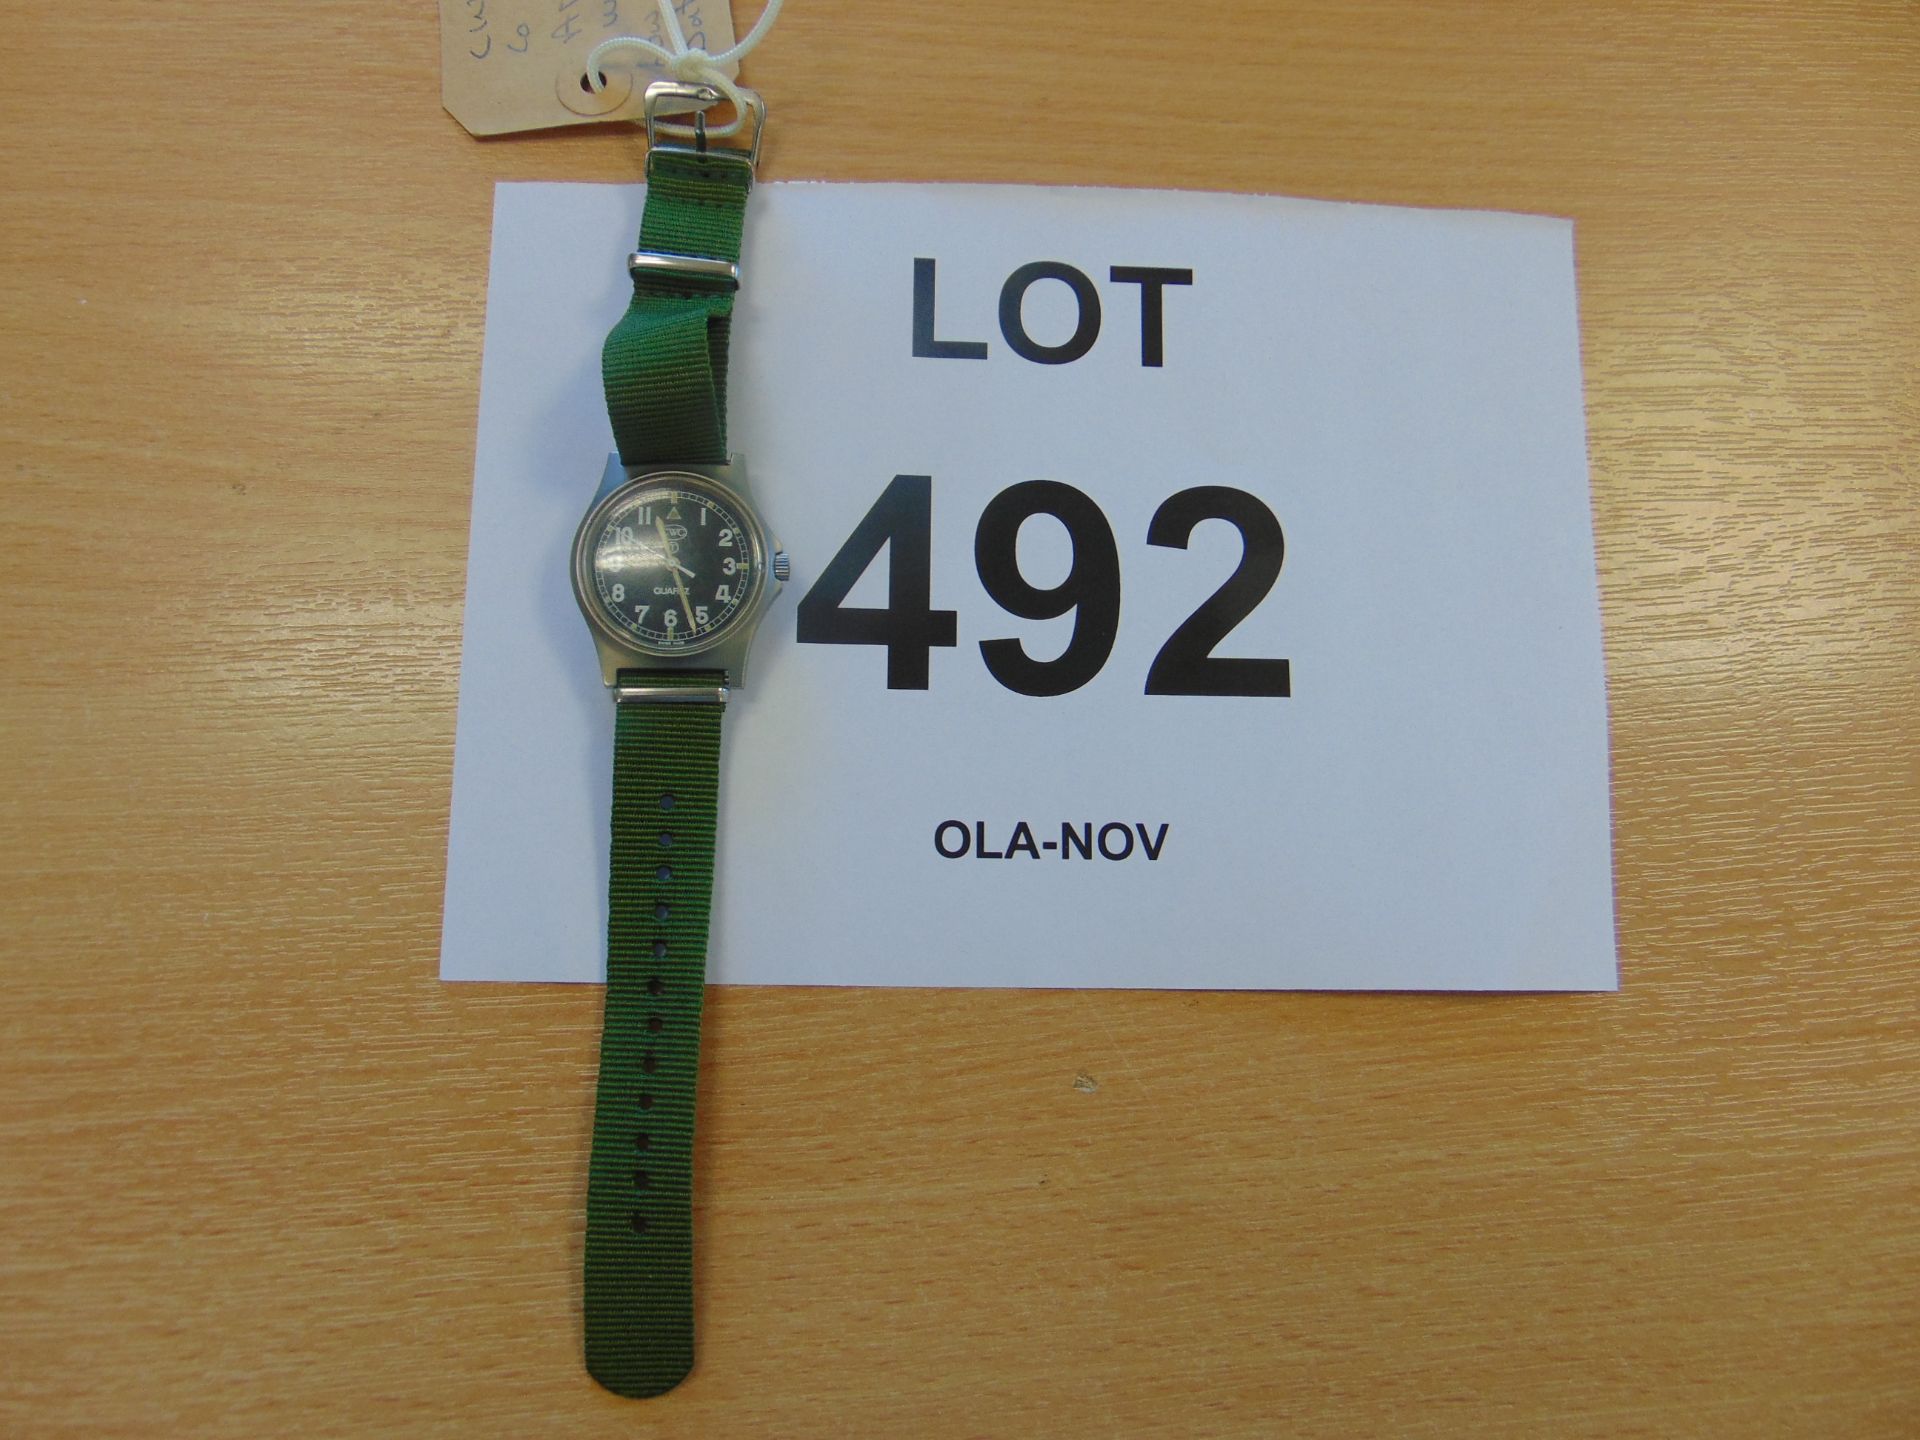 CWC (Cabot Watch Co Switzerland) British Army W10 Service Watch Nato Marks, Low Serial No 849